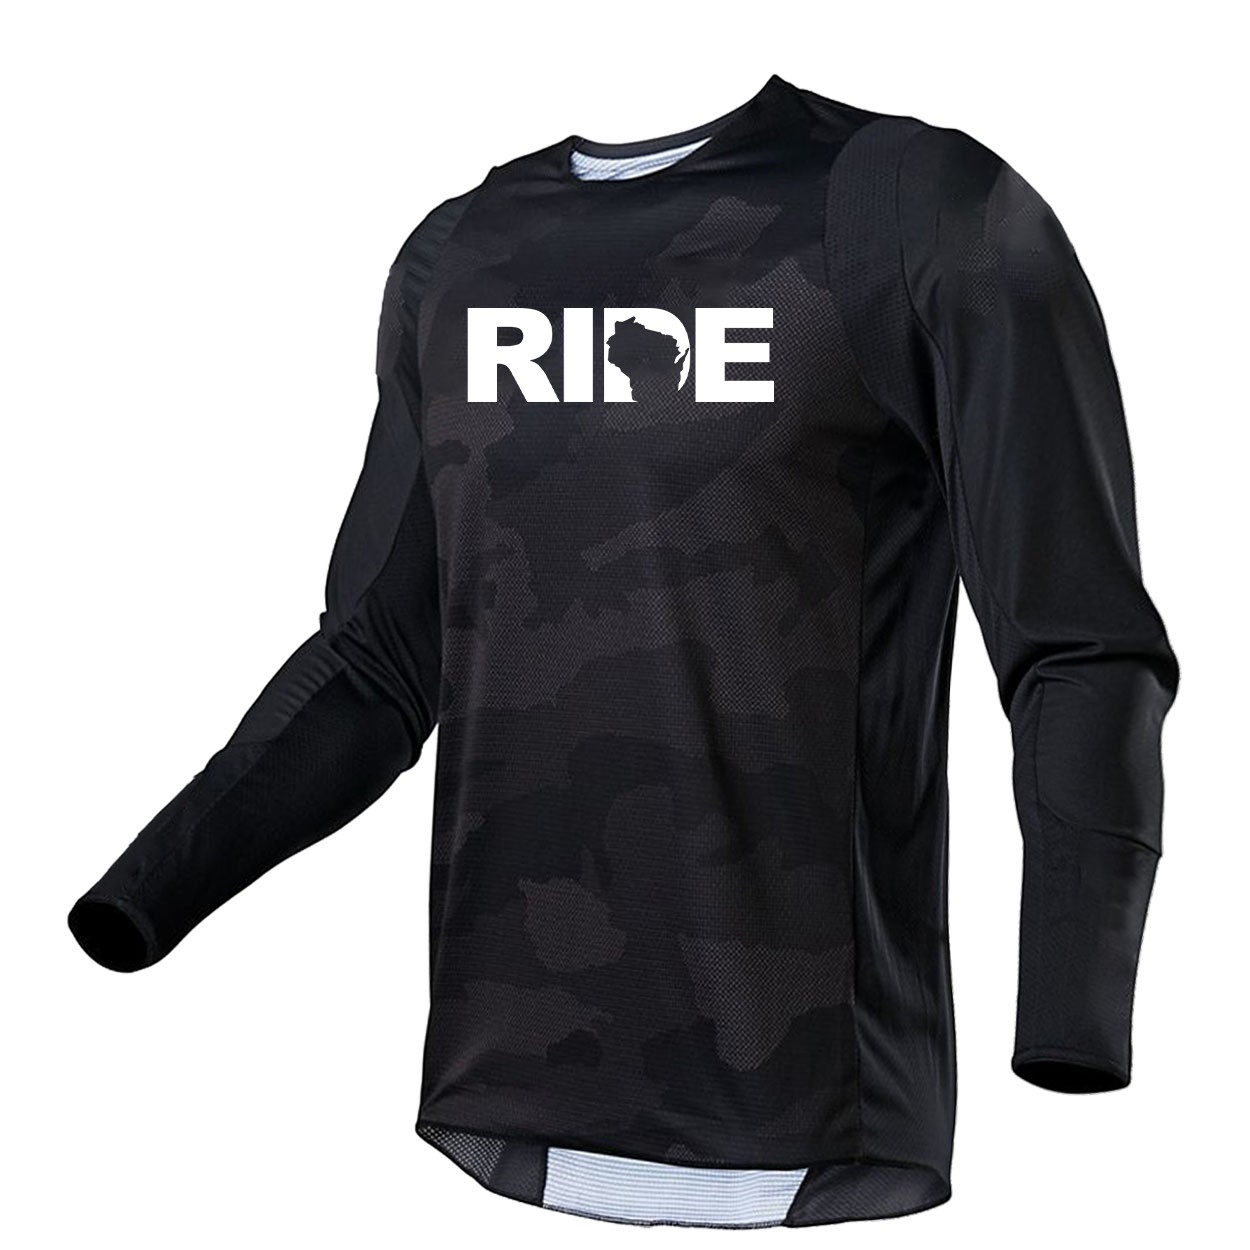 Ride Wisconsin Classic Performance Jersey Long Sleeve Shirt Black Camo